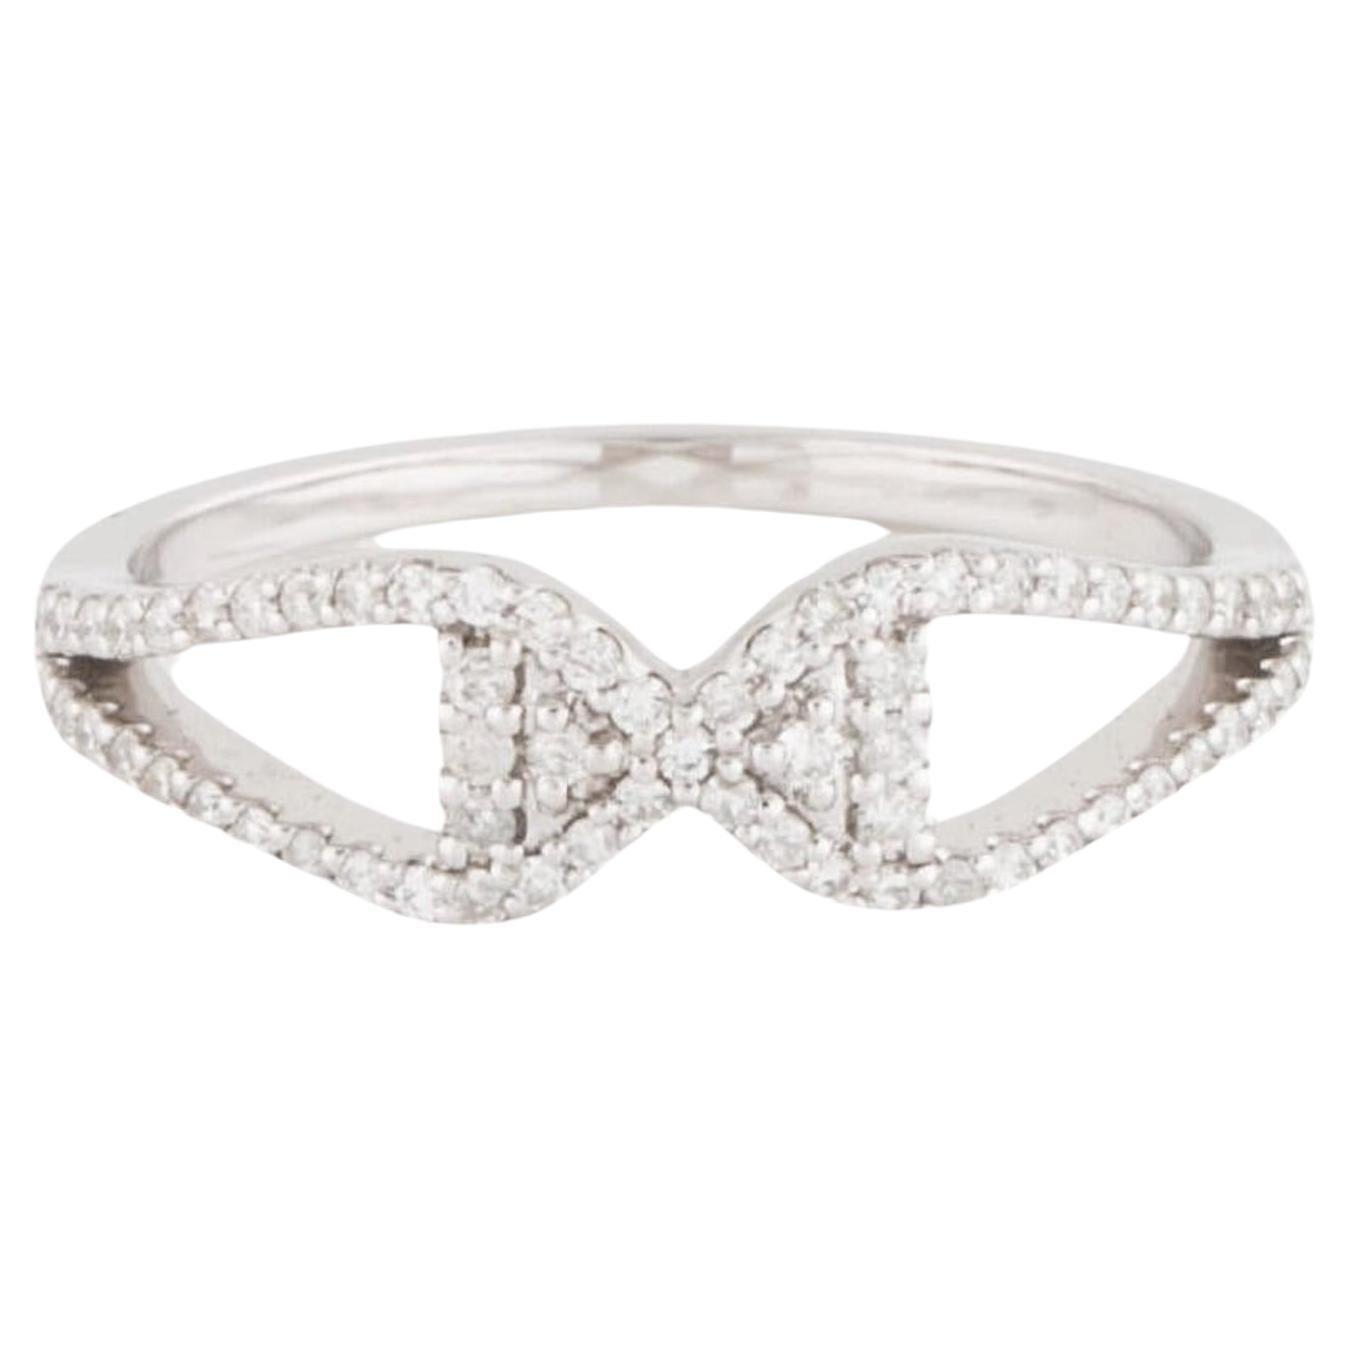 14K Diamond Fashion Band - Size 7.25 - Elegant Style & Timeless Sparkle - Luxury